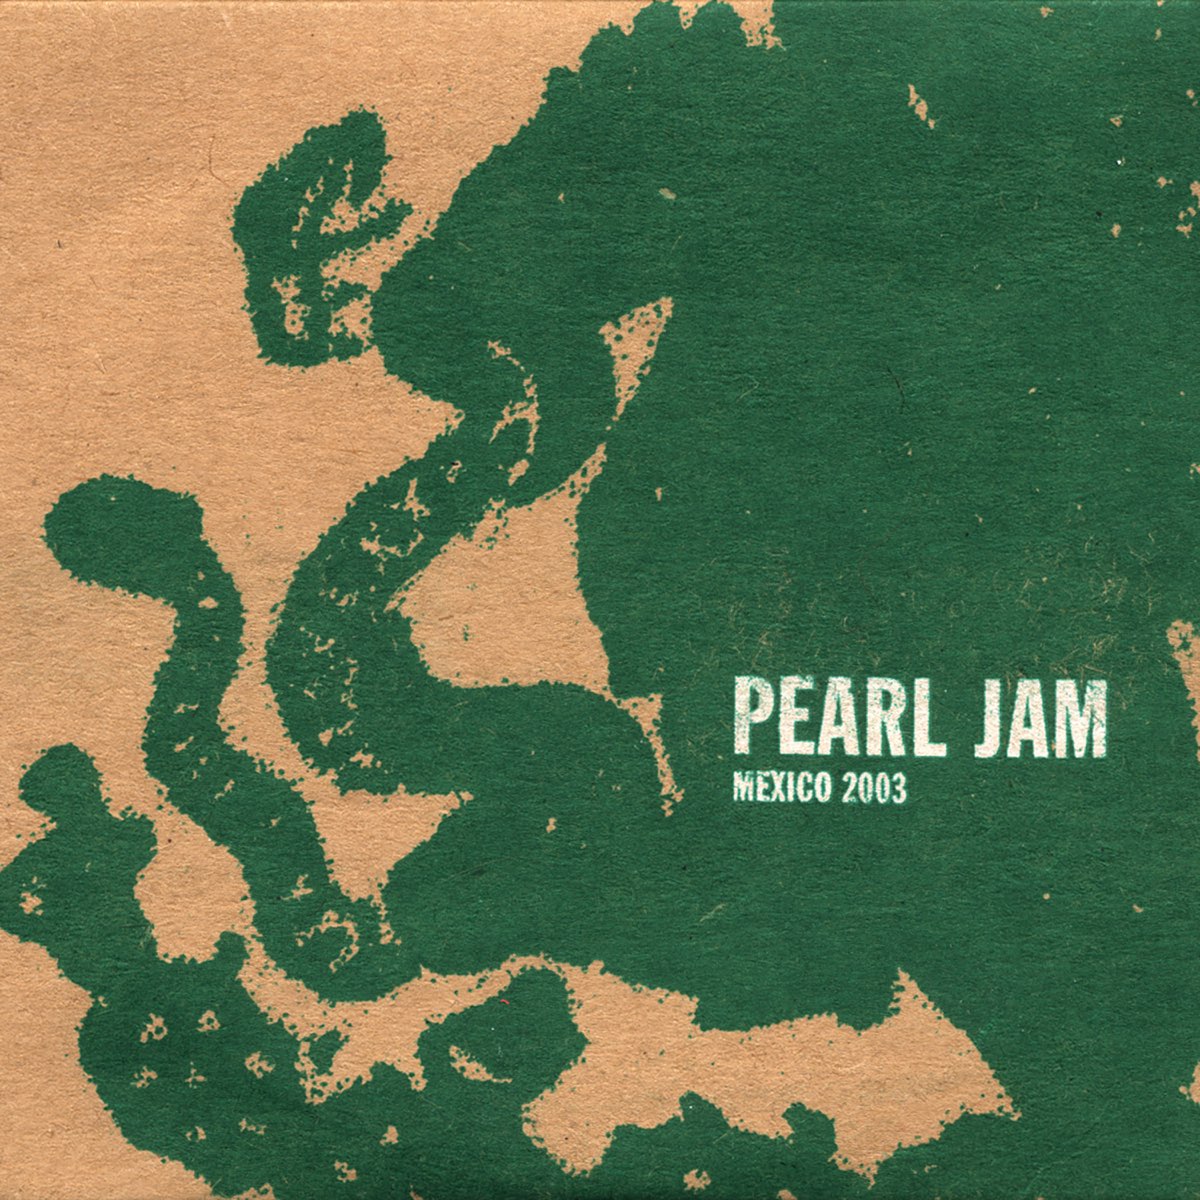 Pearl jam слушать. Pearl Jam обложка. Pearl Jam 2022. Pearl Jam vs обложка альбома. Pearl Jam обложки альбомов.